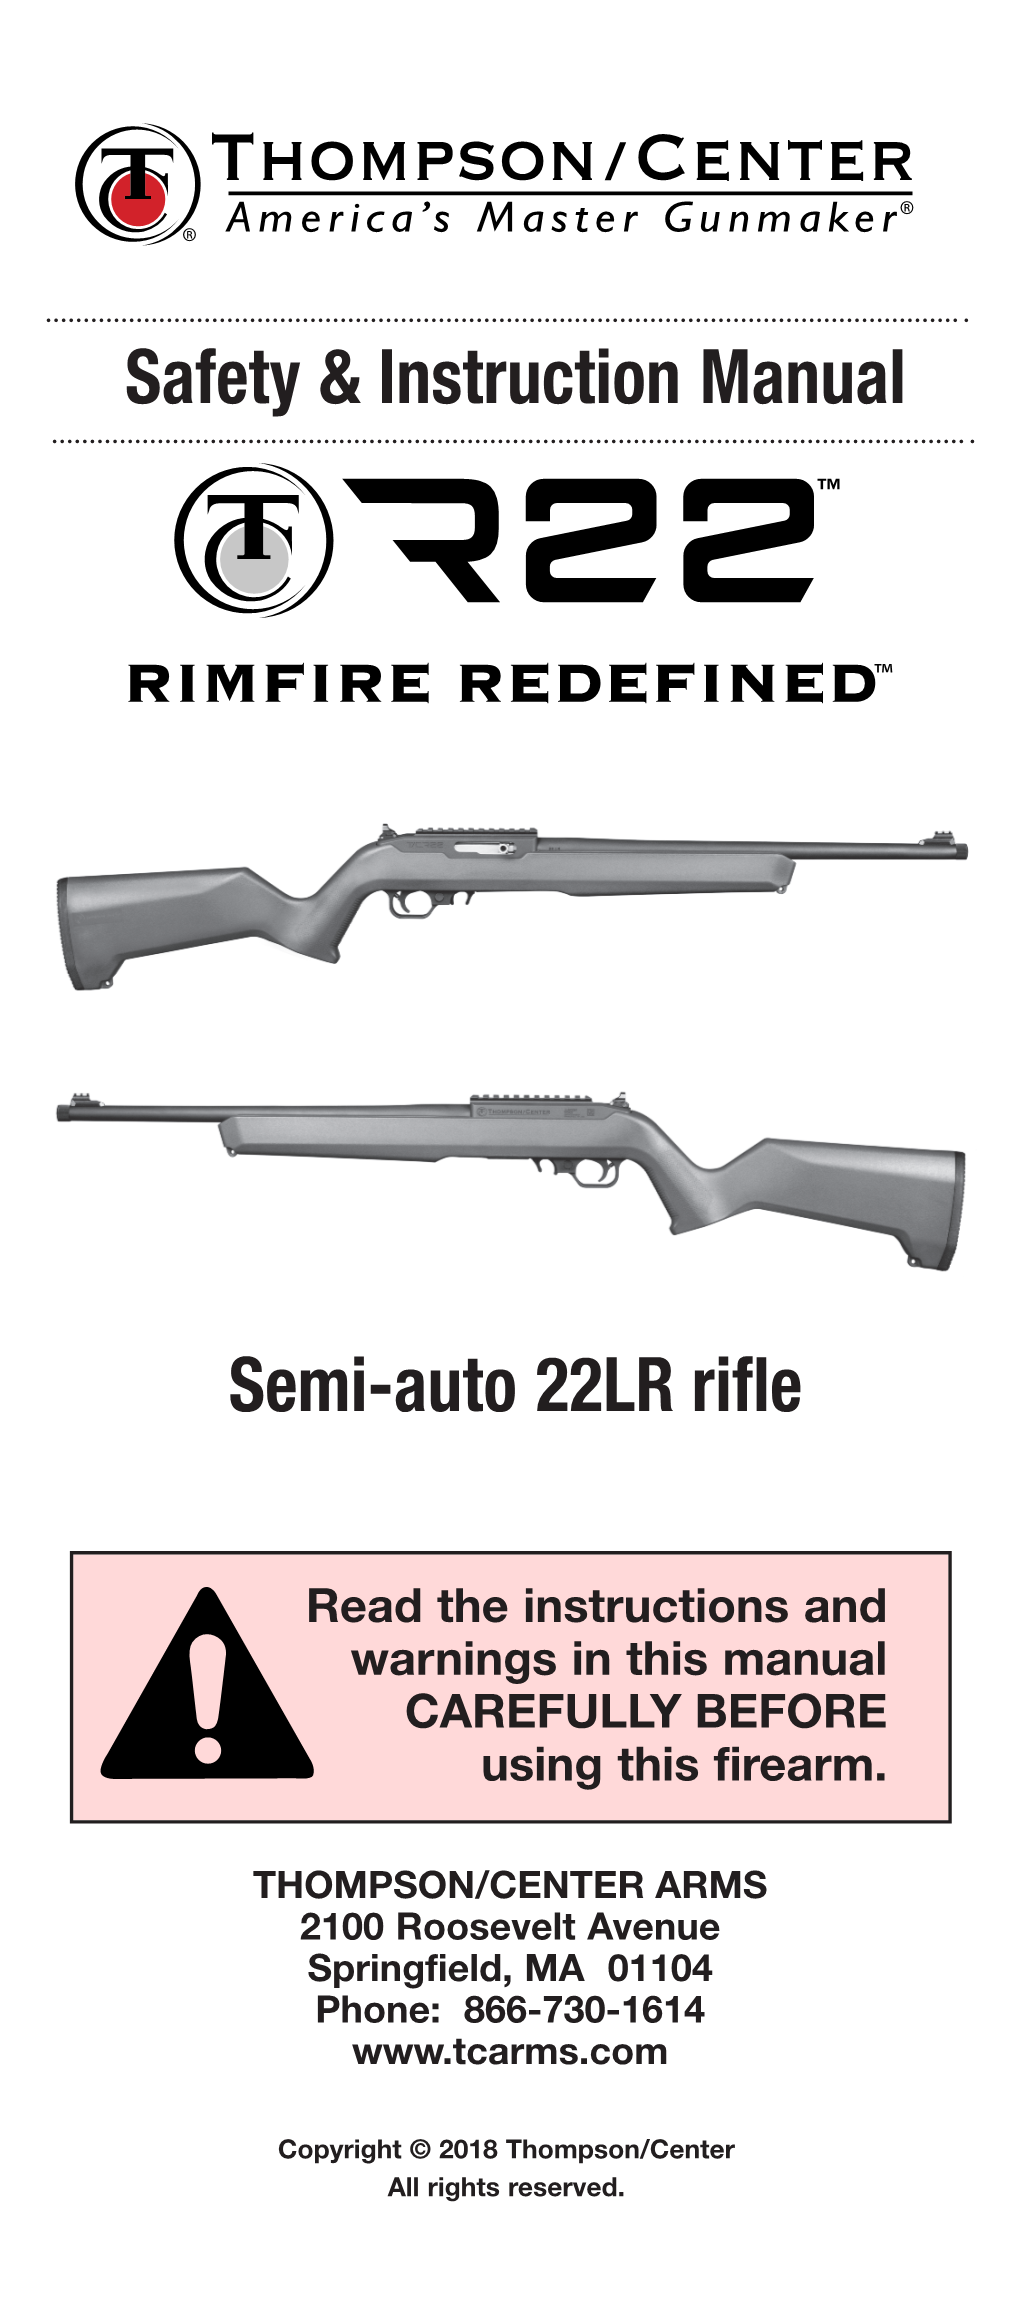 TCR22 Rifle Manual 8/13/18 12:00 PM P